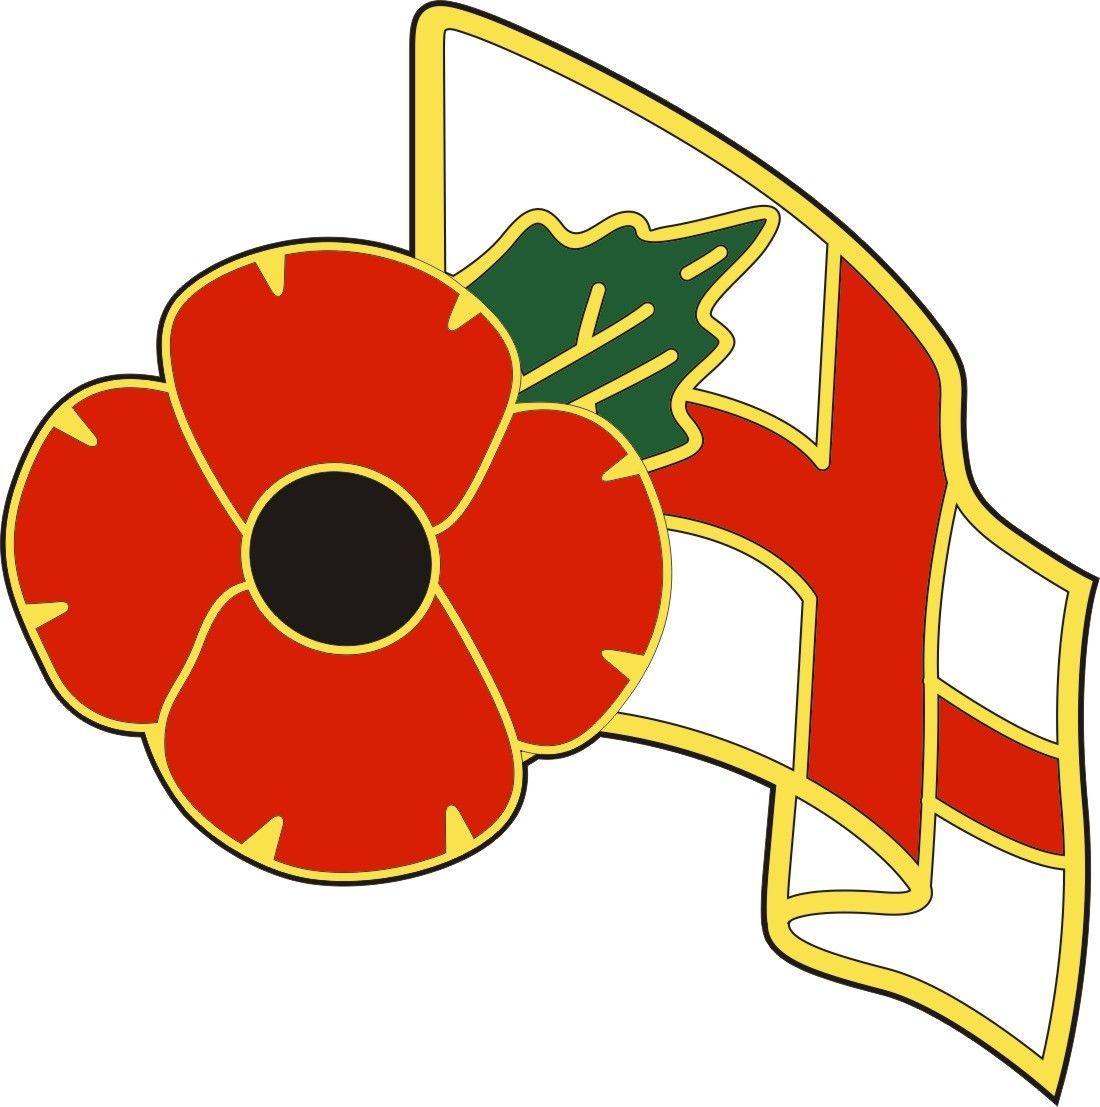 Orange Poppy Logo - Poppy Car Sticker With Poppy and England Flag